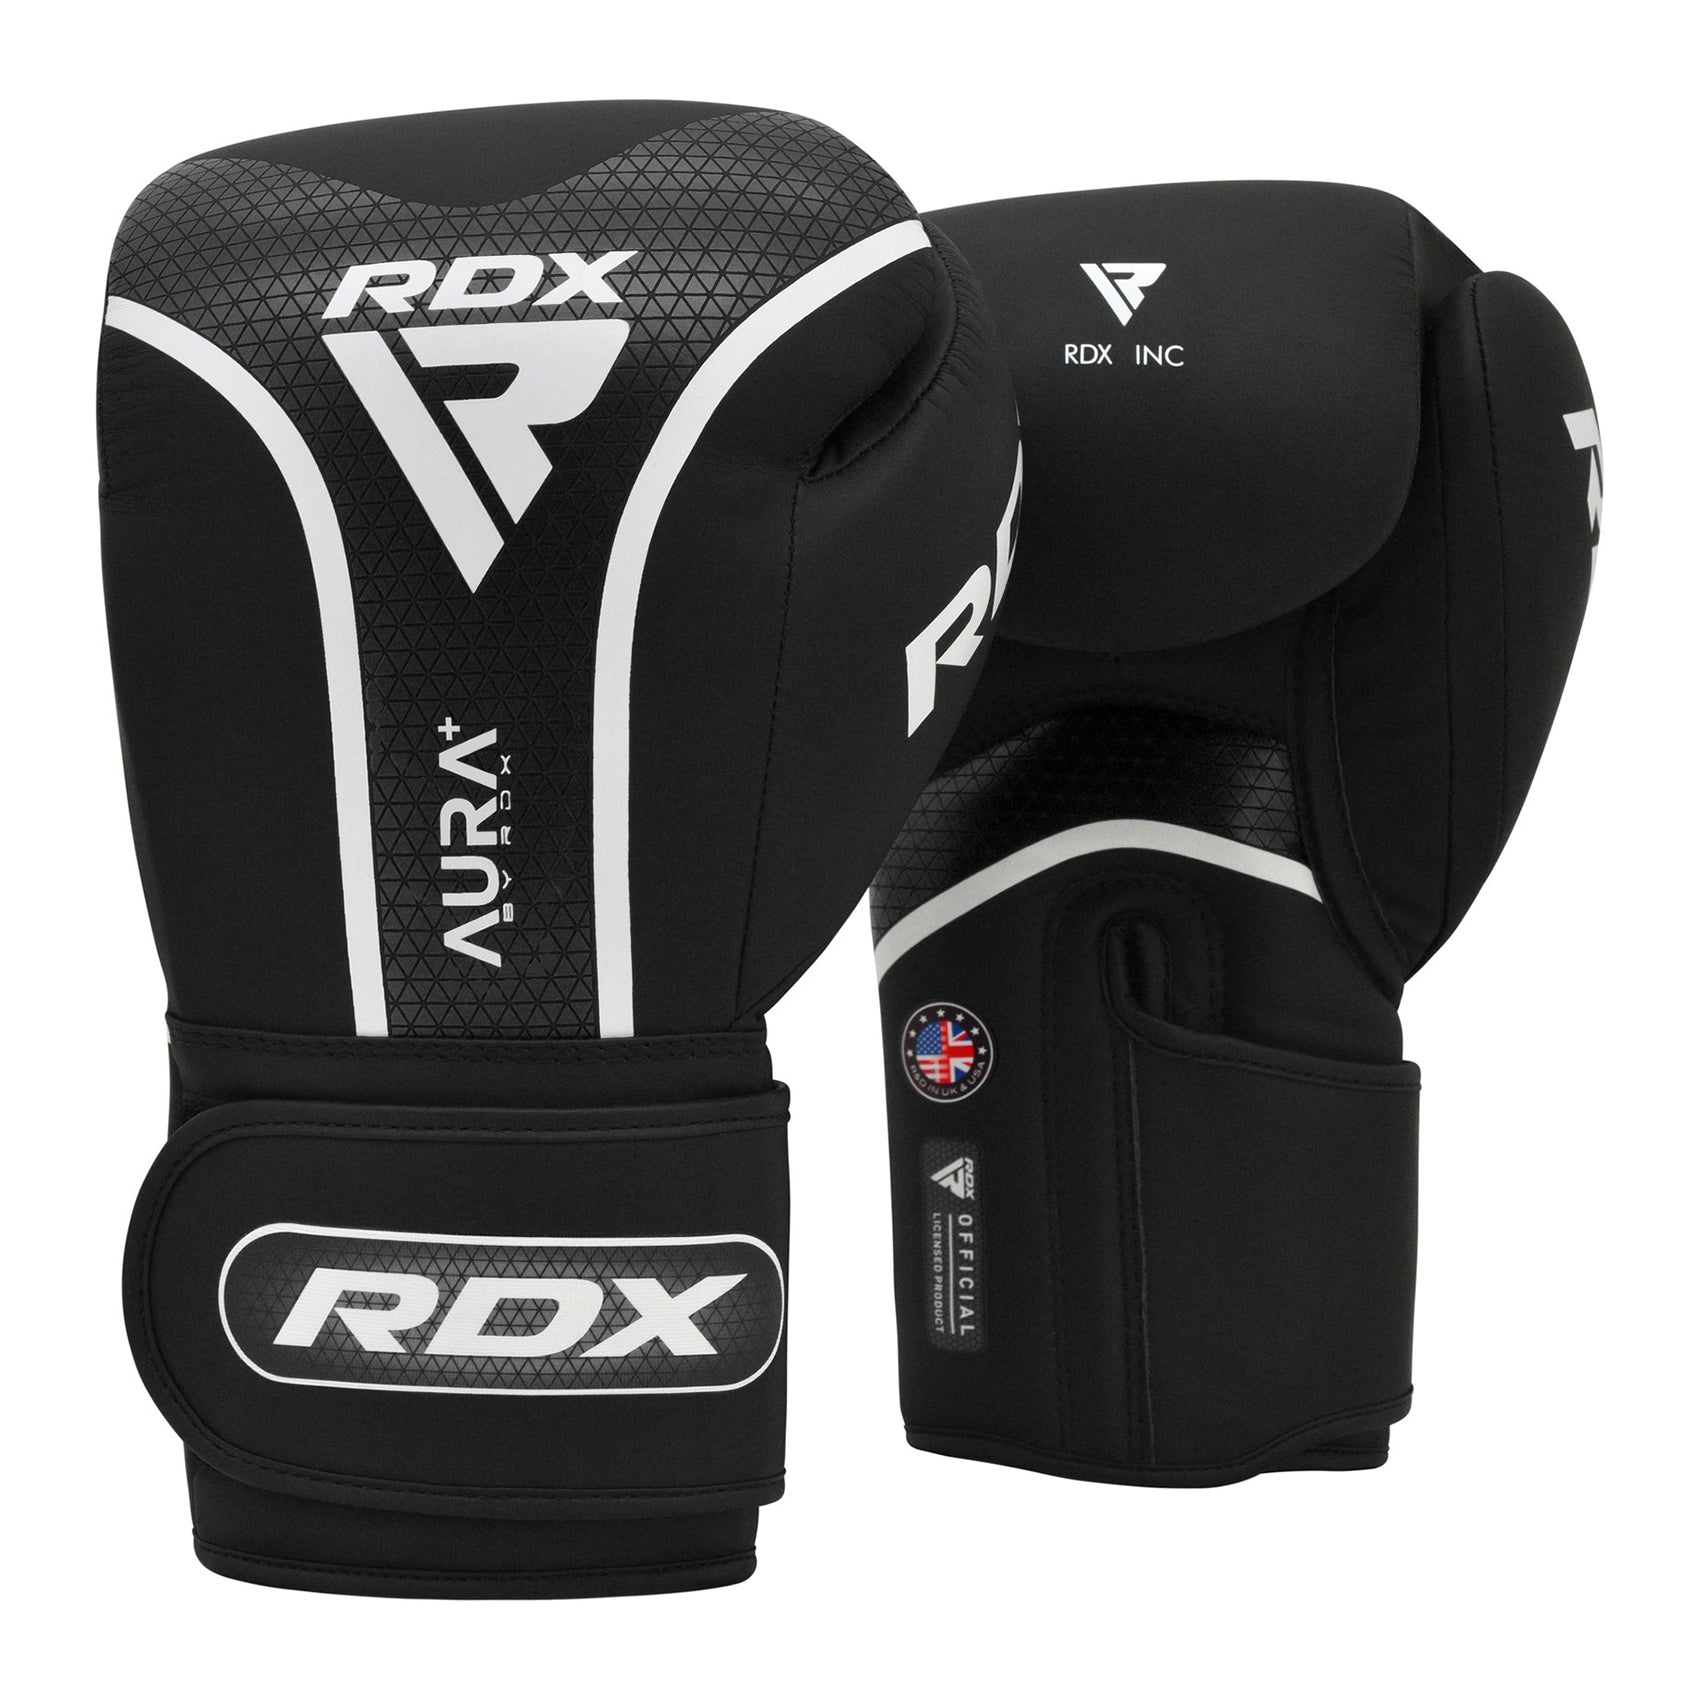 RDX T17 Aura Nova Tech Boxing Sparring Gloves - Matte Black - 14oz - Shock Absorbing Foam, Moisture Wicking for Heavy Punching Bag Training, Kickboxing, Muay Thai, Sparring - Pro-Distributing